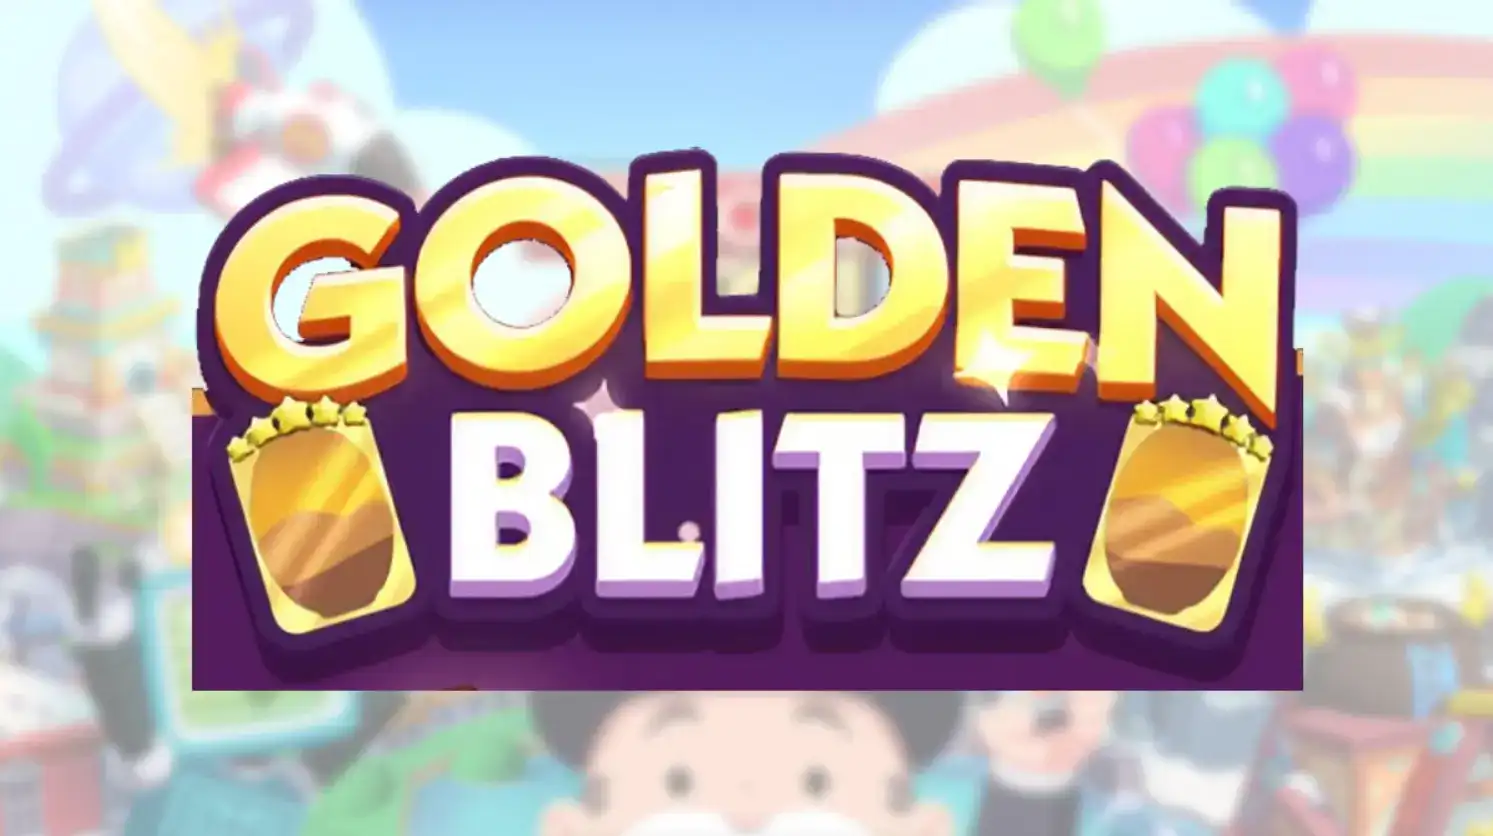 Golden Blitz Schedule - When is the Next Golden Blitz Event